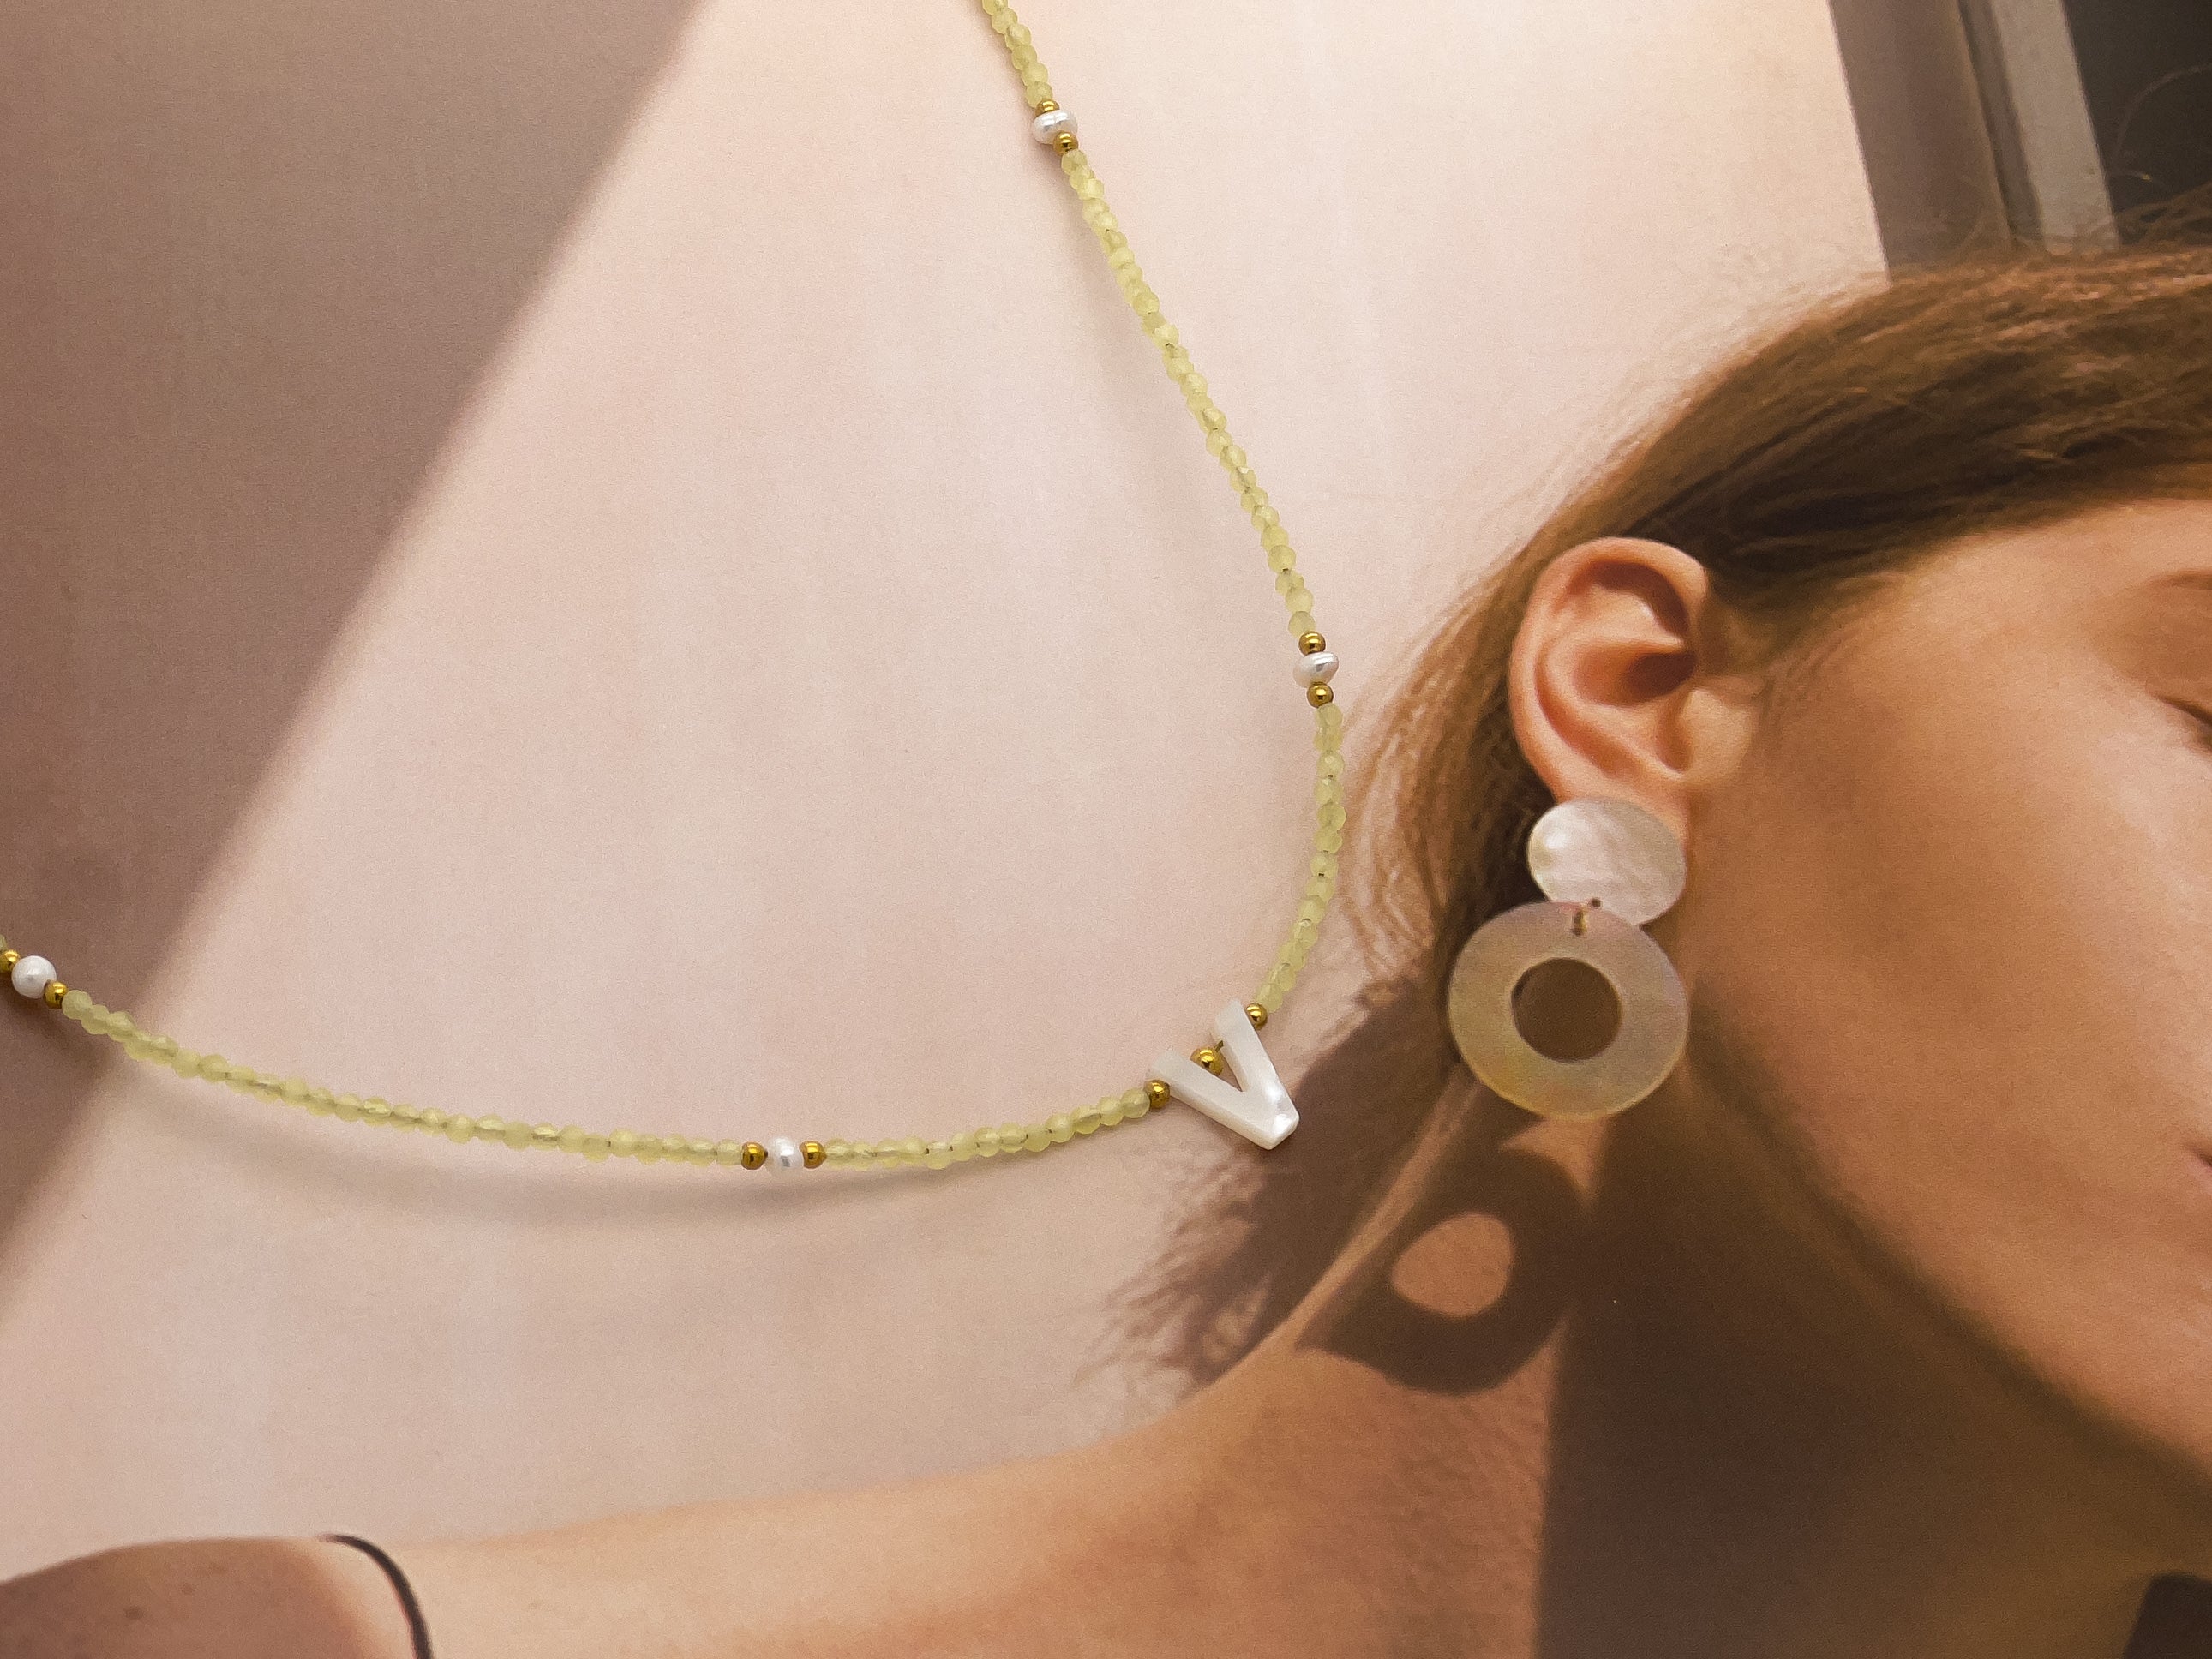 Vienna Pearl Gem Choker Necklace - Everyday Jewelry | Chic Chic Bon